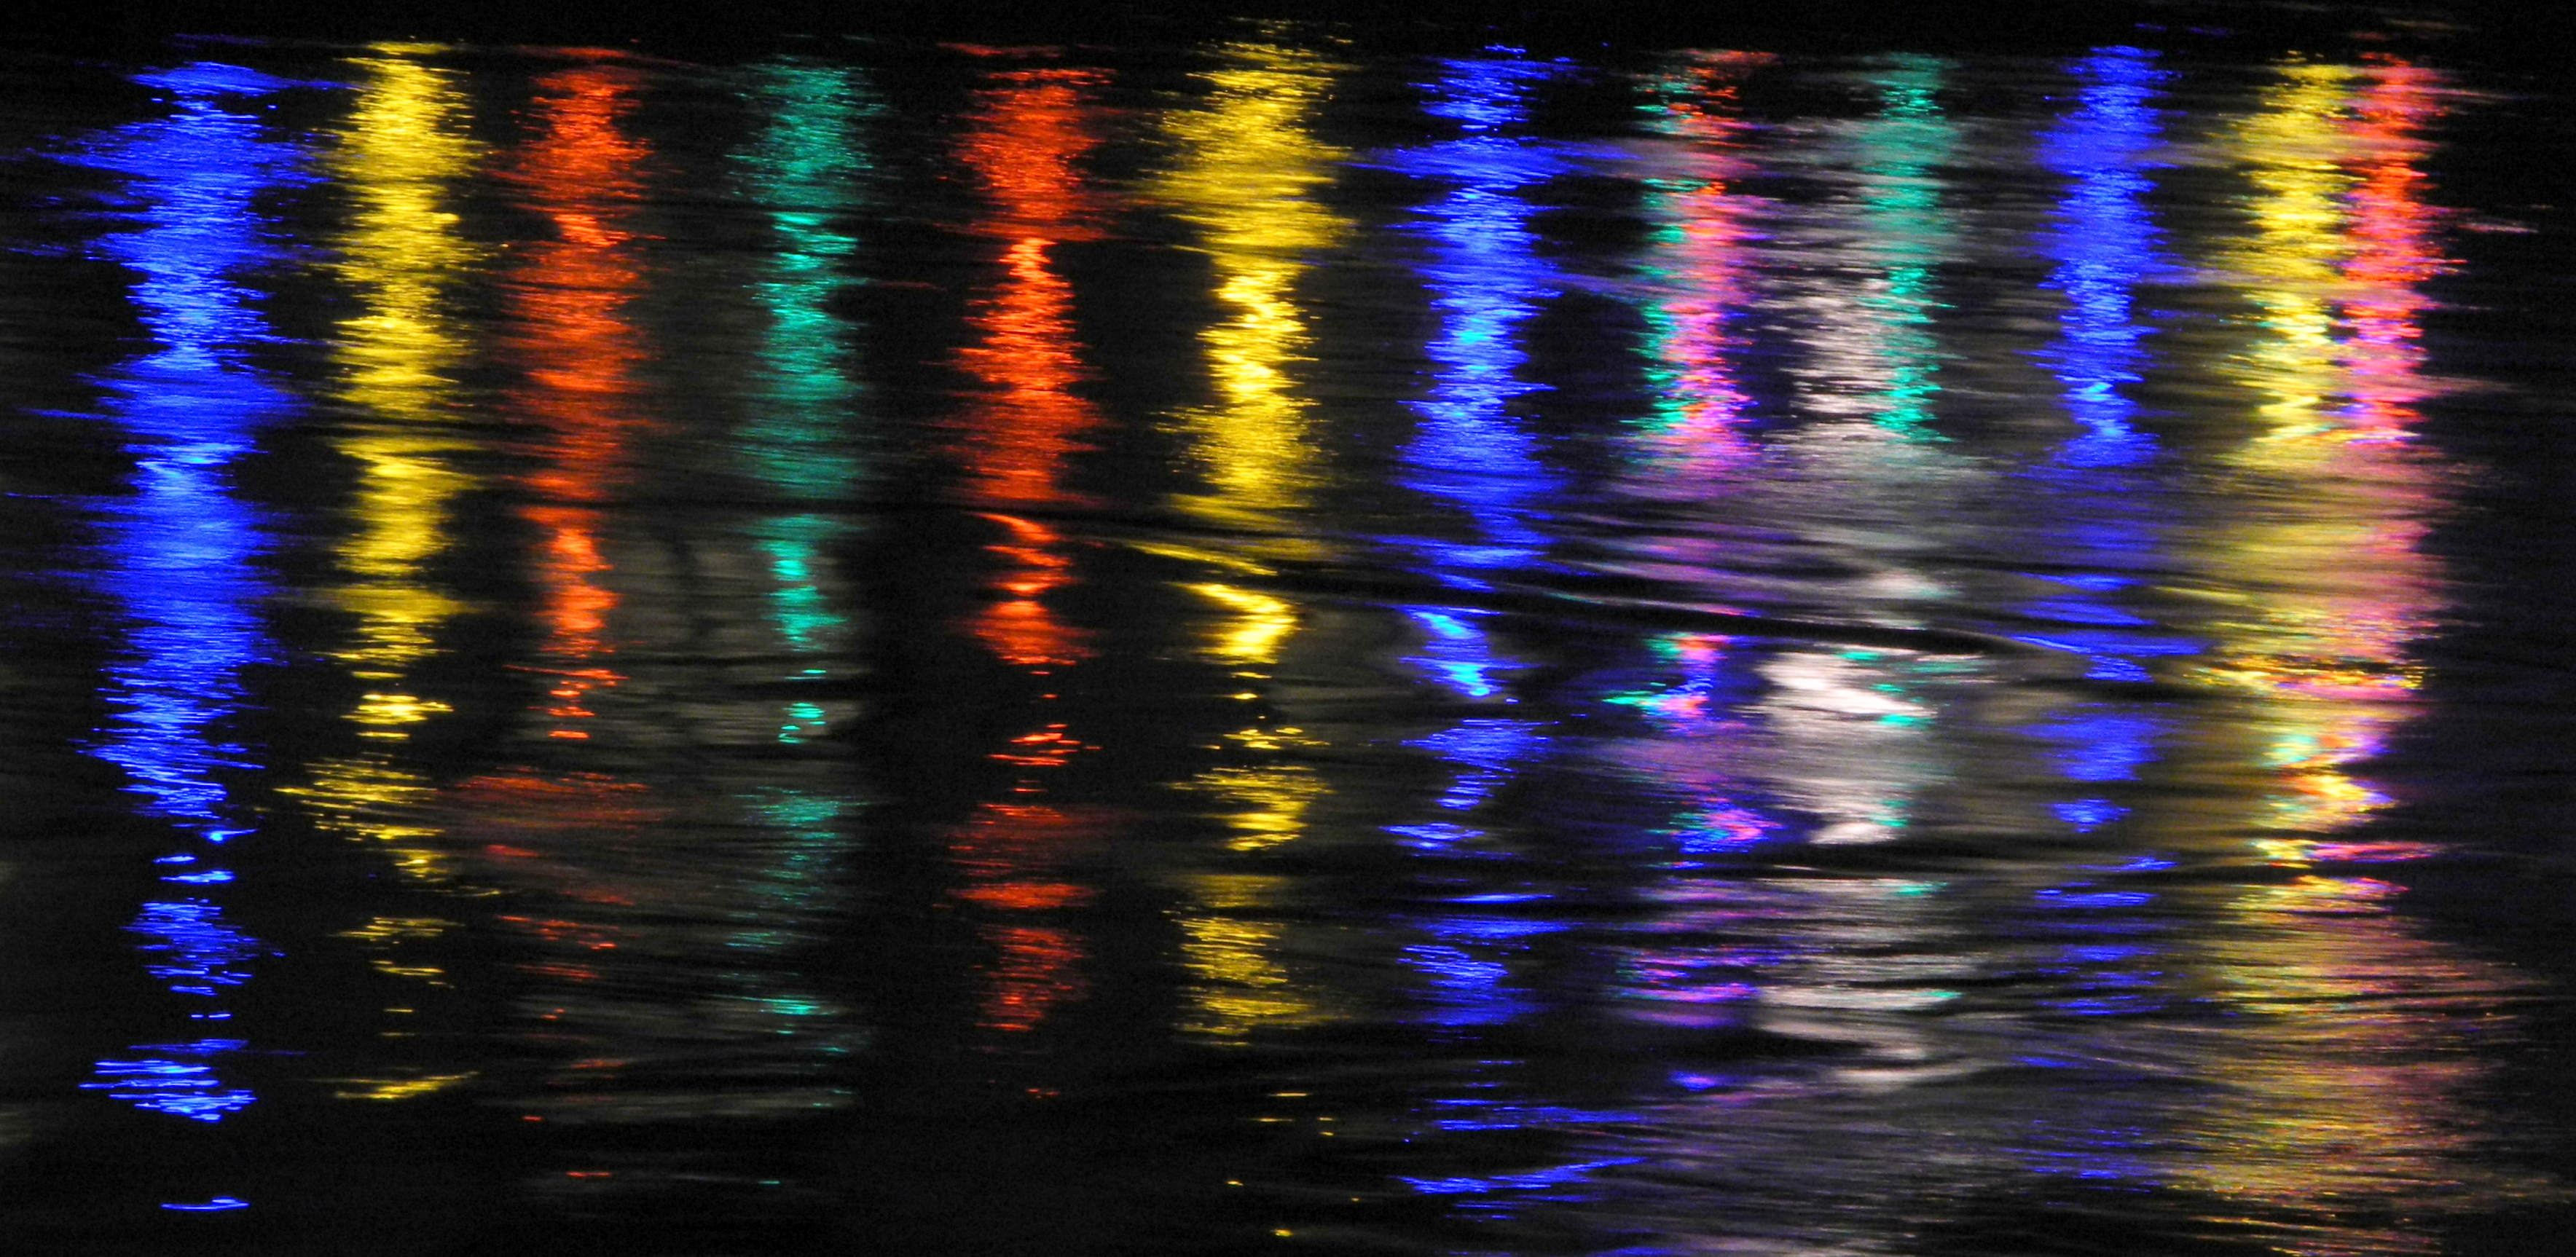 4_Vision_Rainbow water